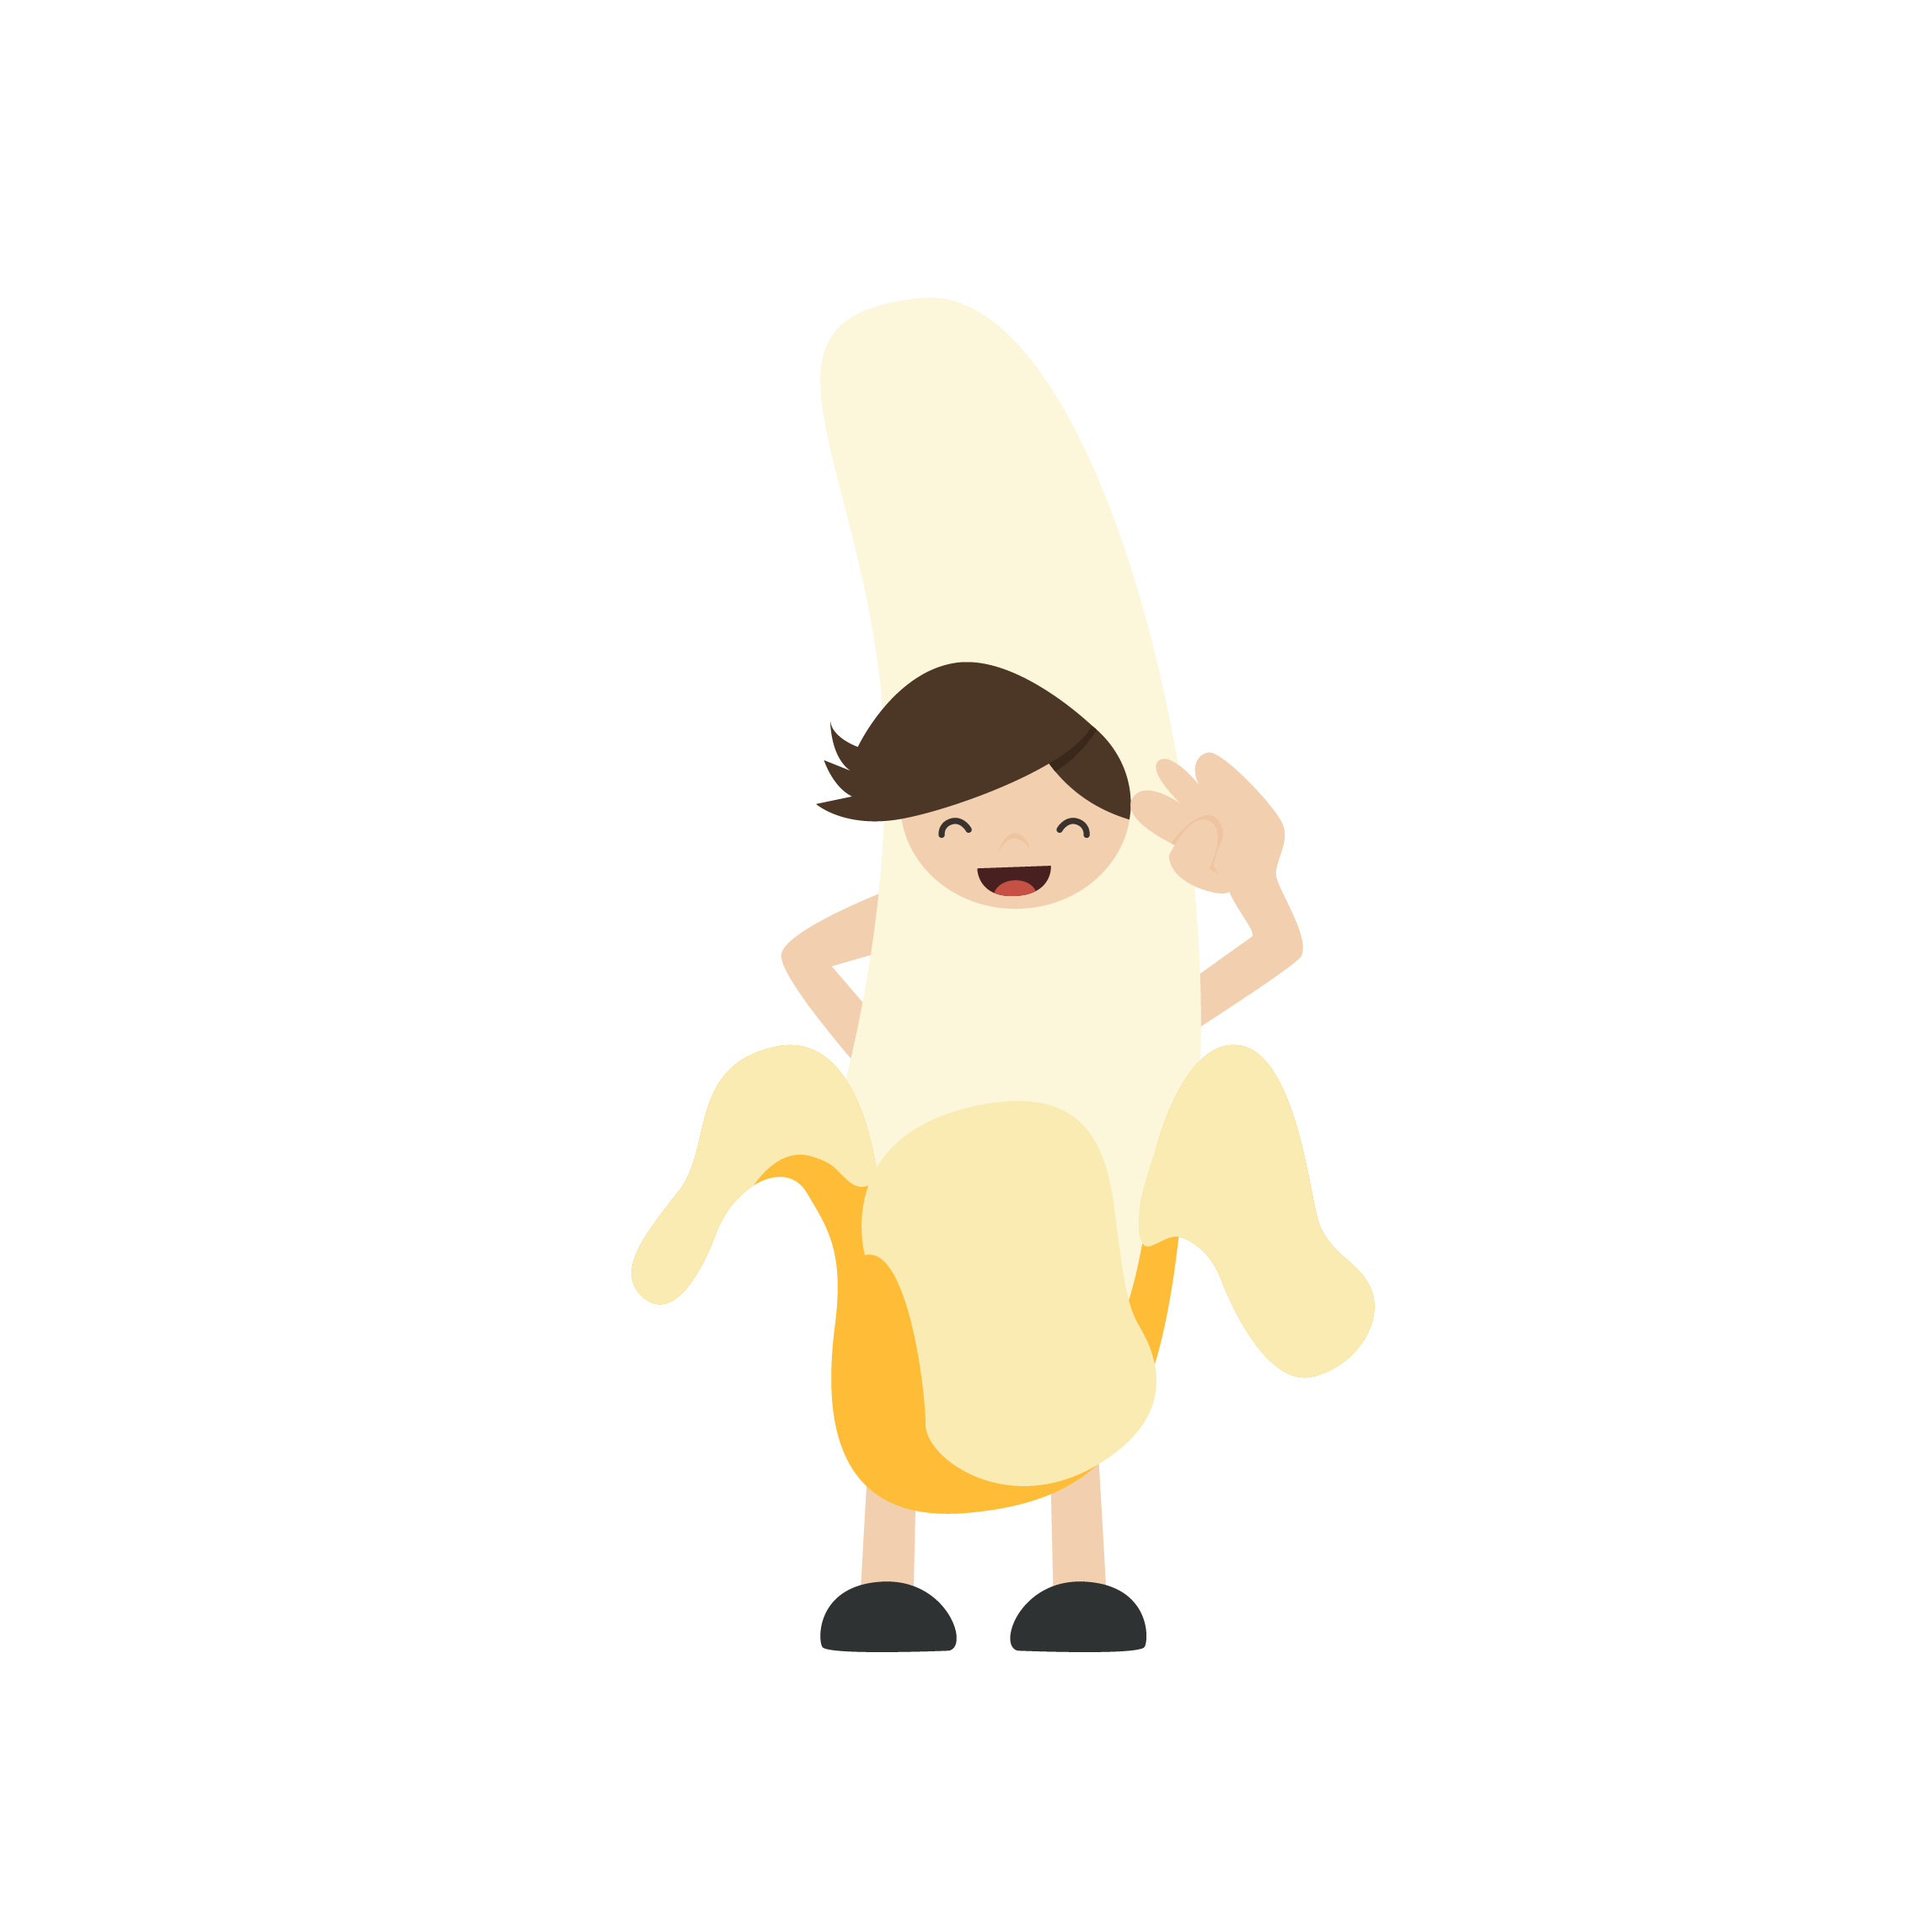 Banana dress cartoon illustration